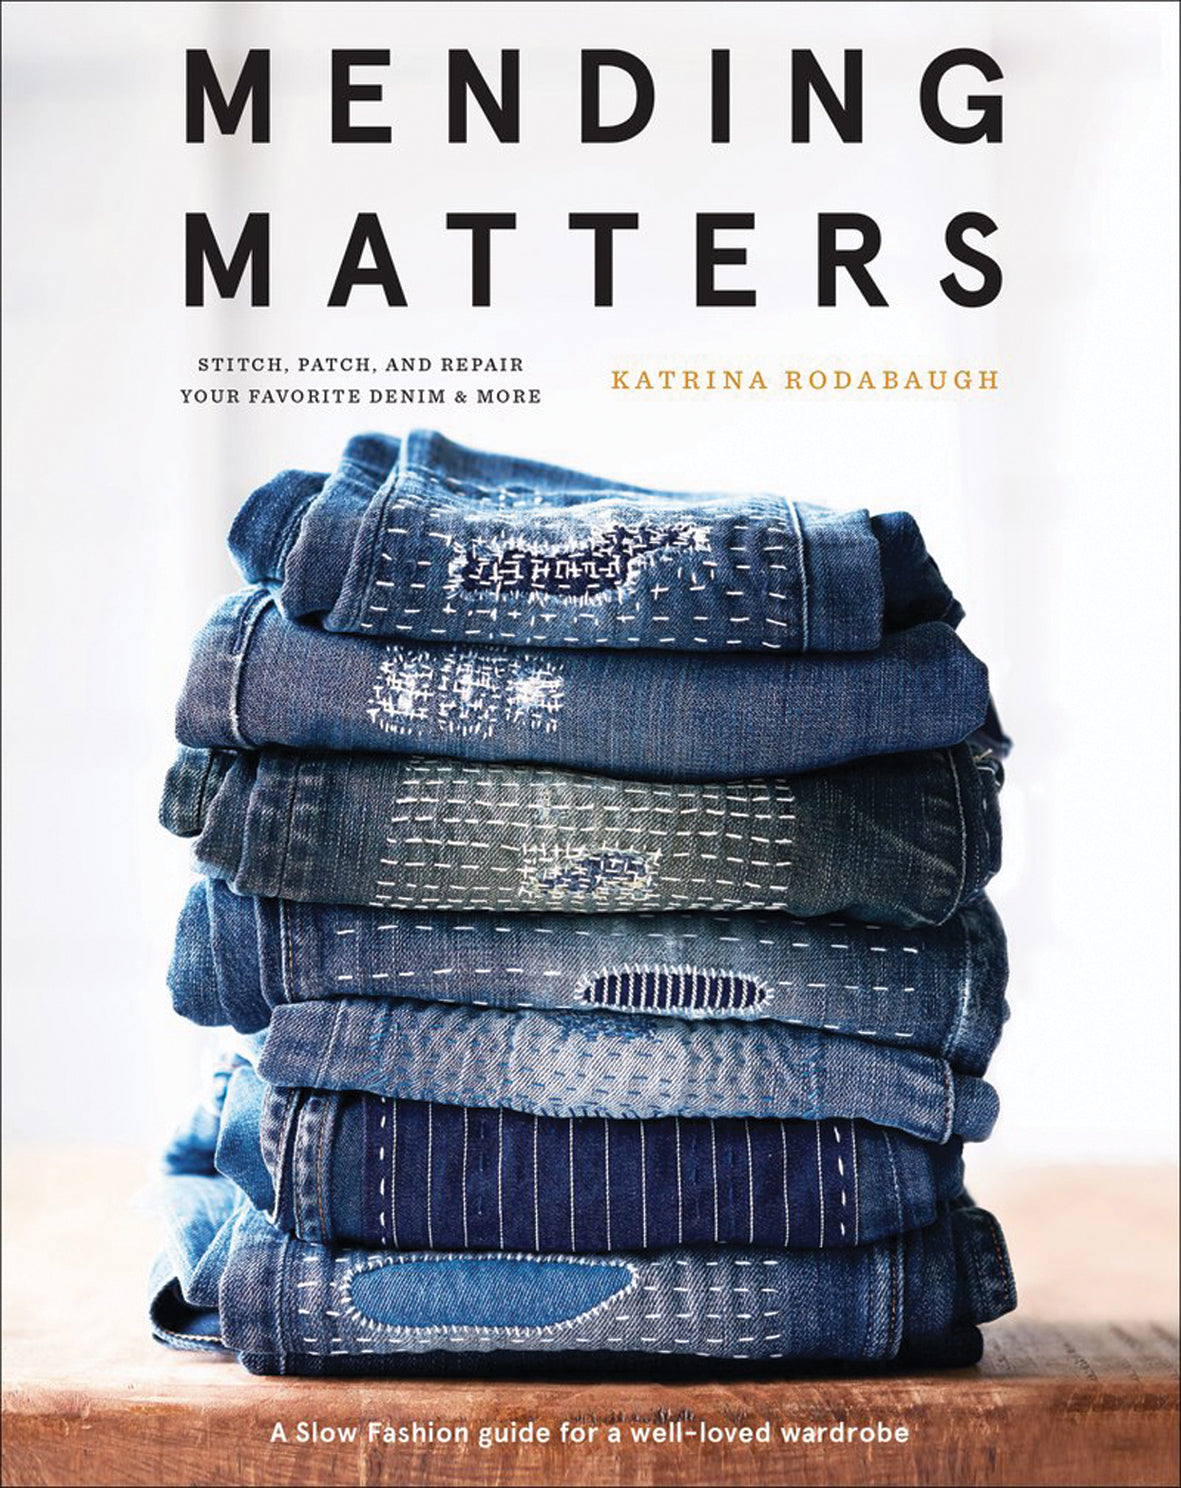 Mending Matters by Katrina Rodaburgh Collingwood-Norris